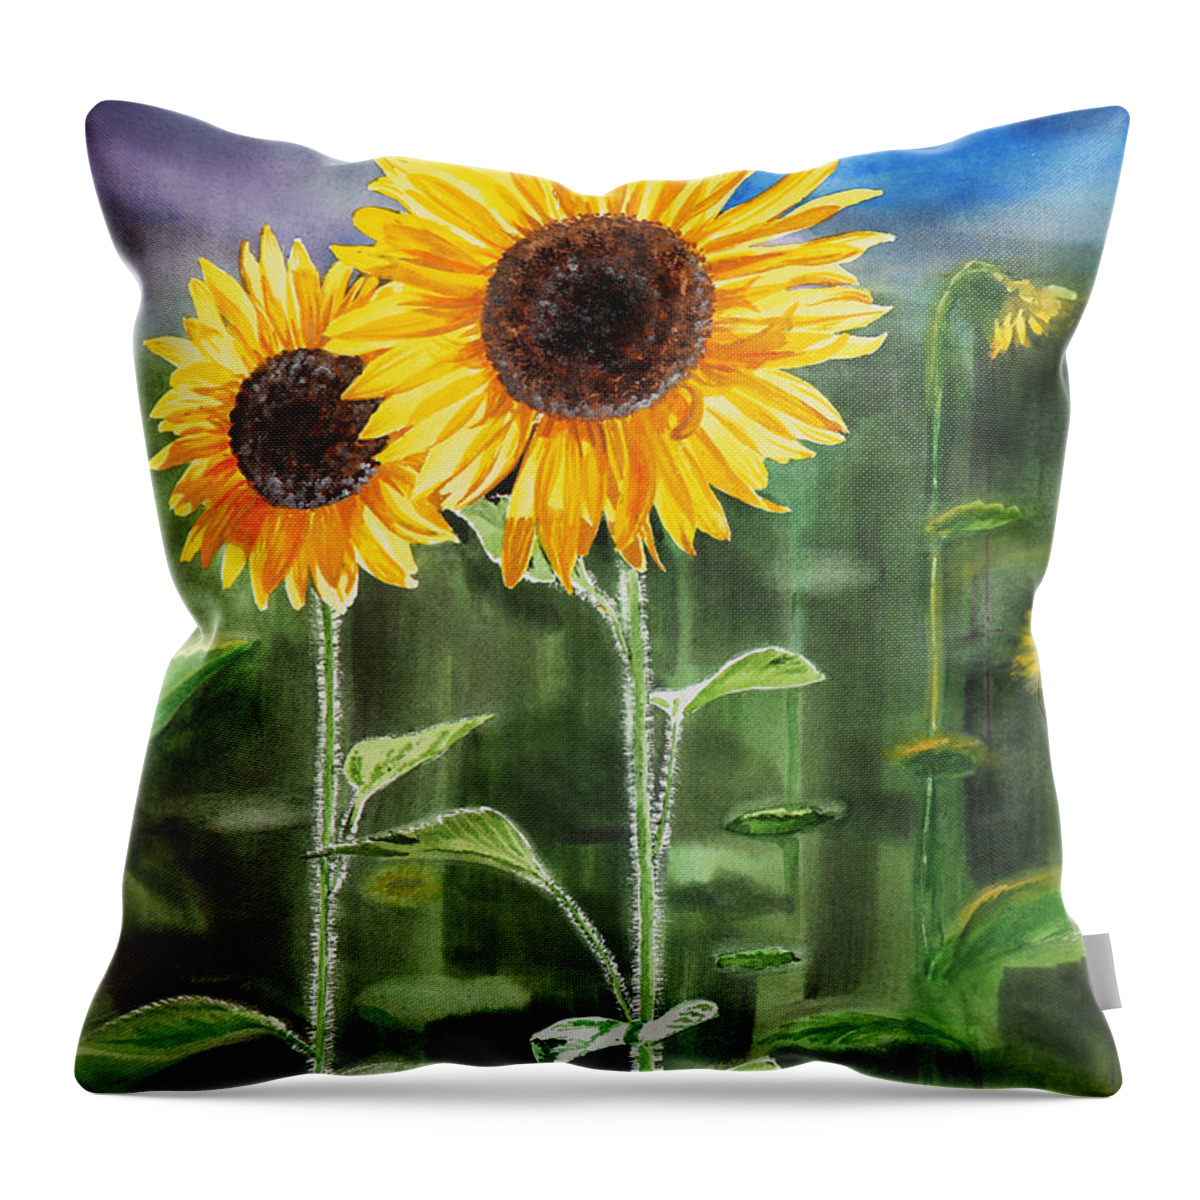 Sunflowers Throw Pillow featuring the painting Sunflowers #1 by Irina Sztukowski